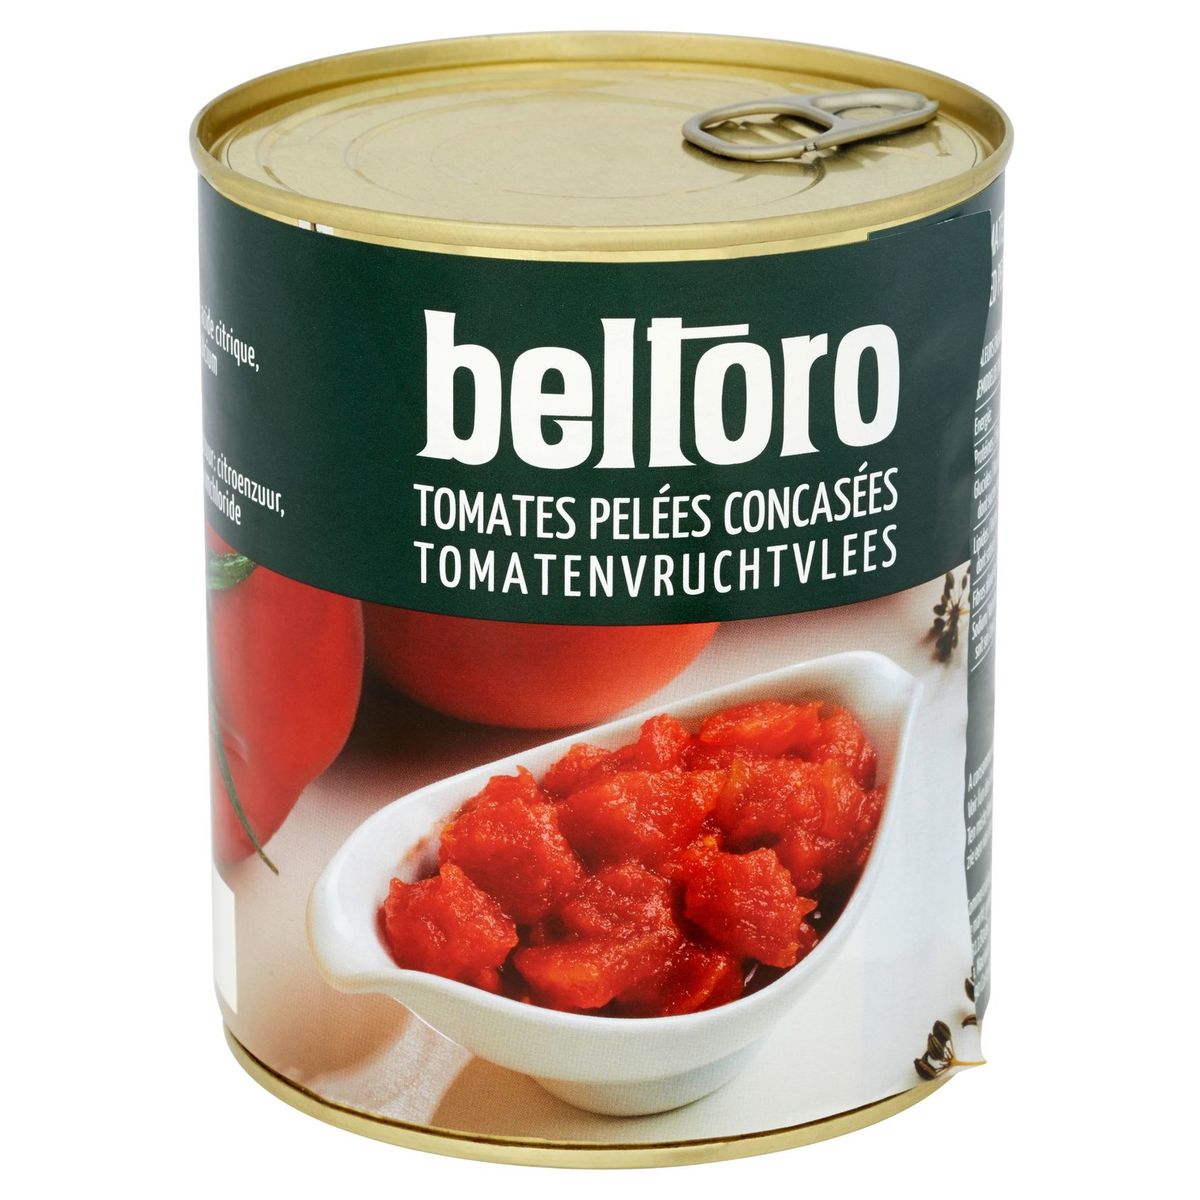 Beltoro Tomatenvruchtvlees 780 g